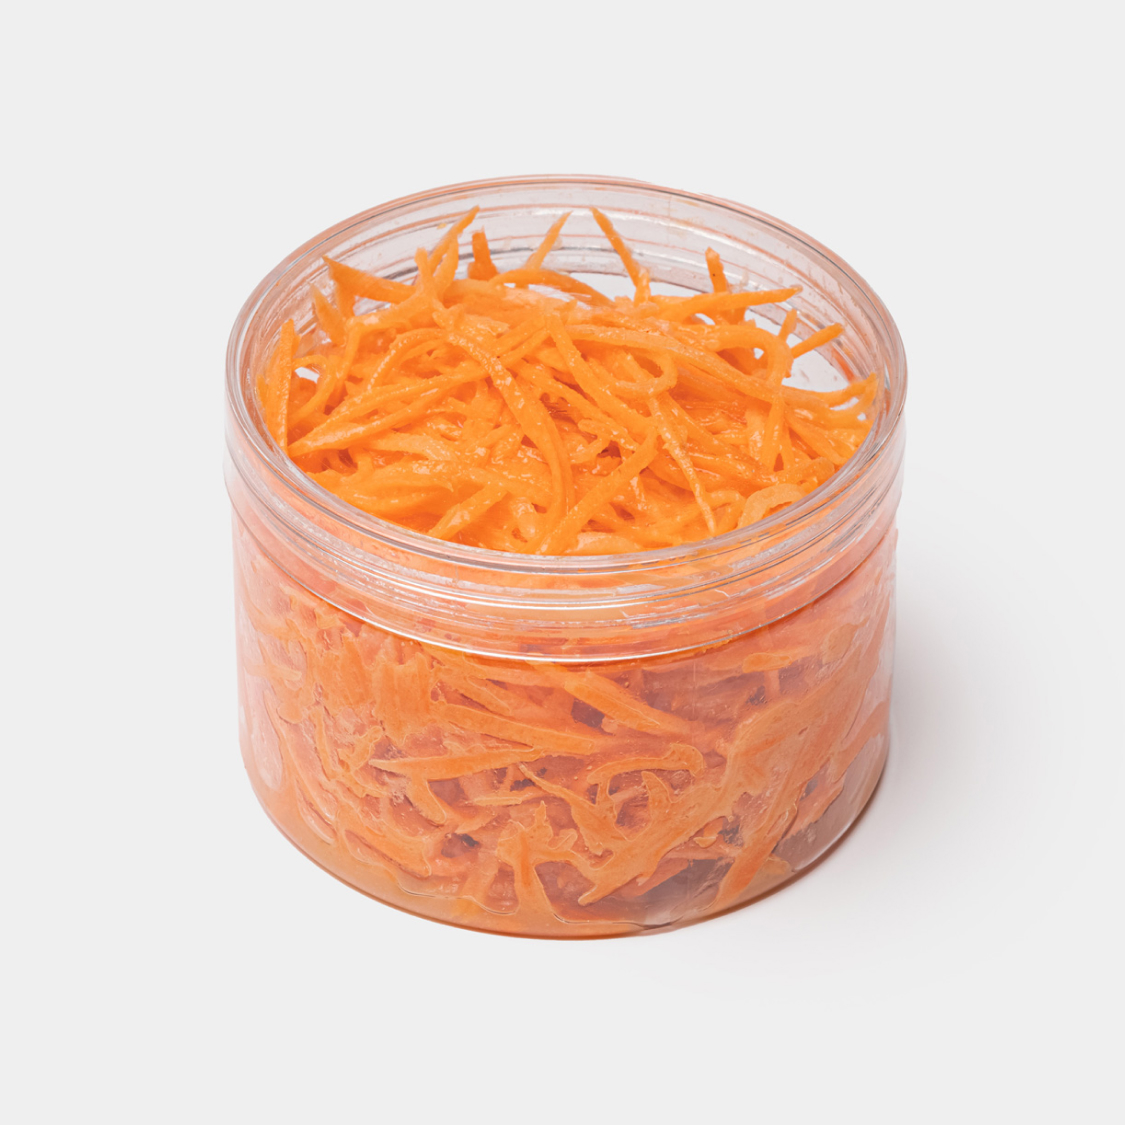 carotte râpée